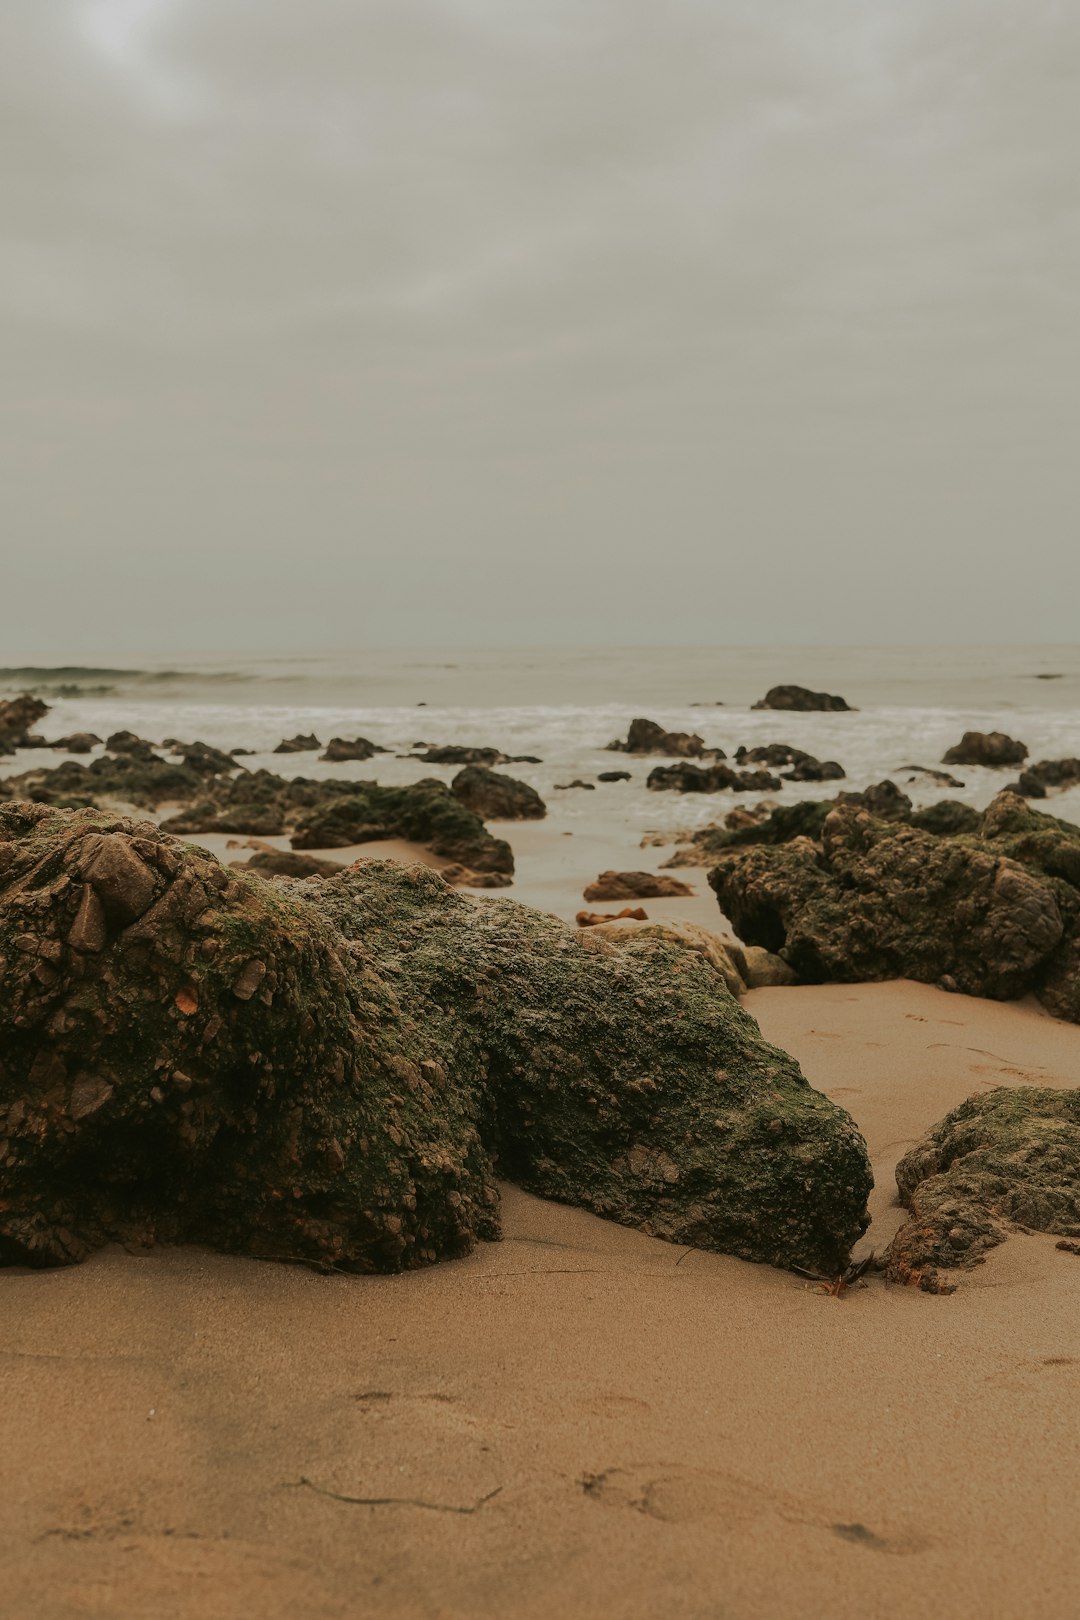 gray rocks on seashore during daytime